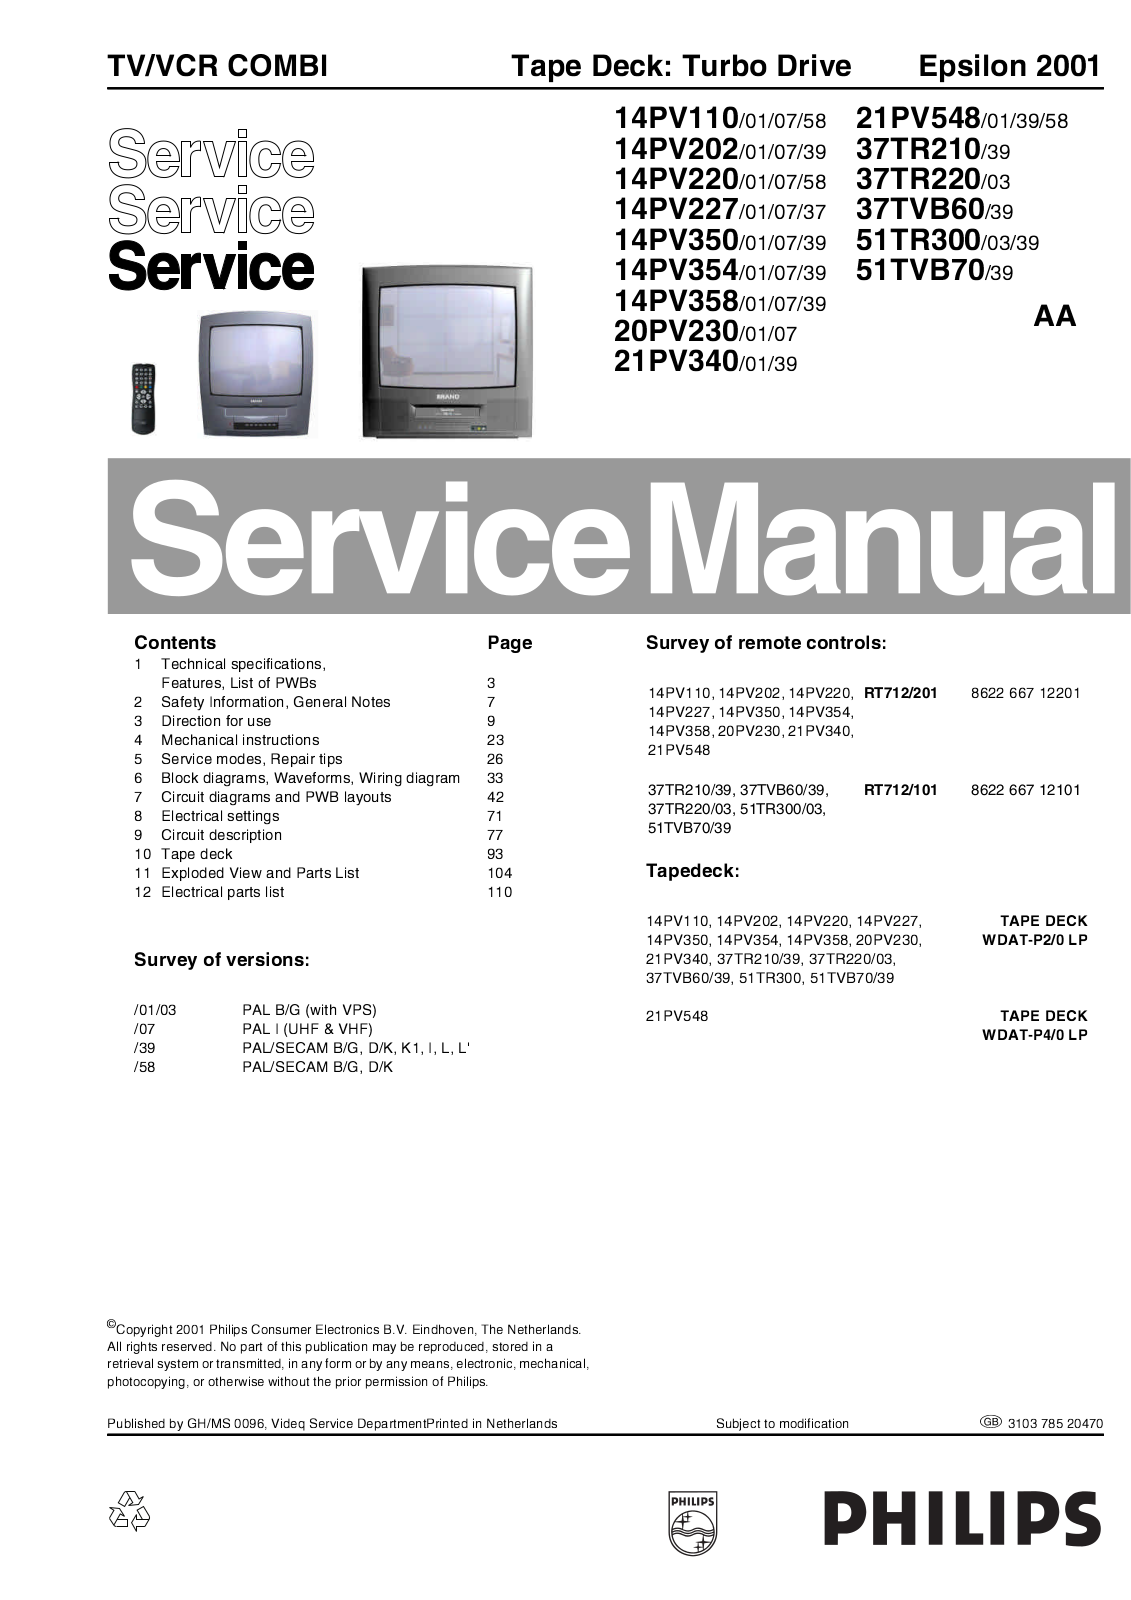 Philips Epsilon Service Manual